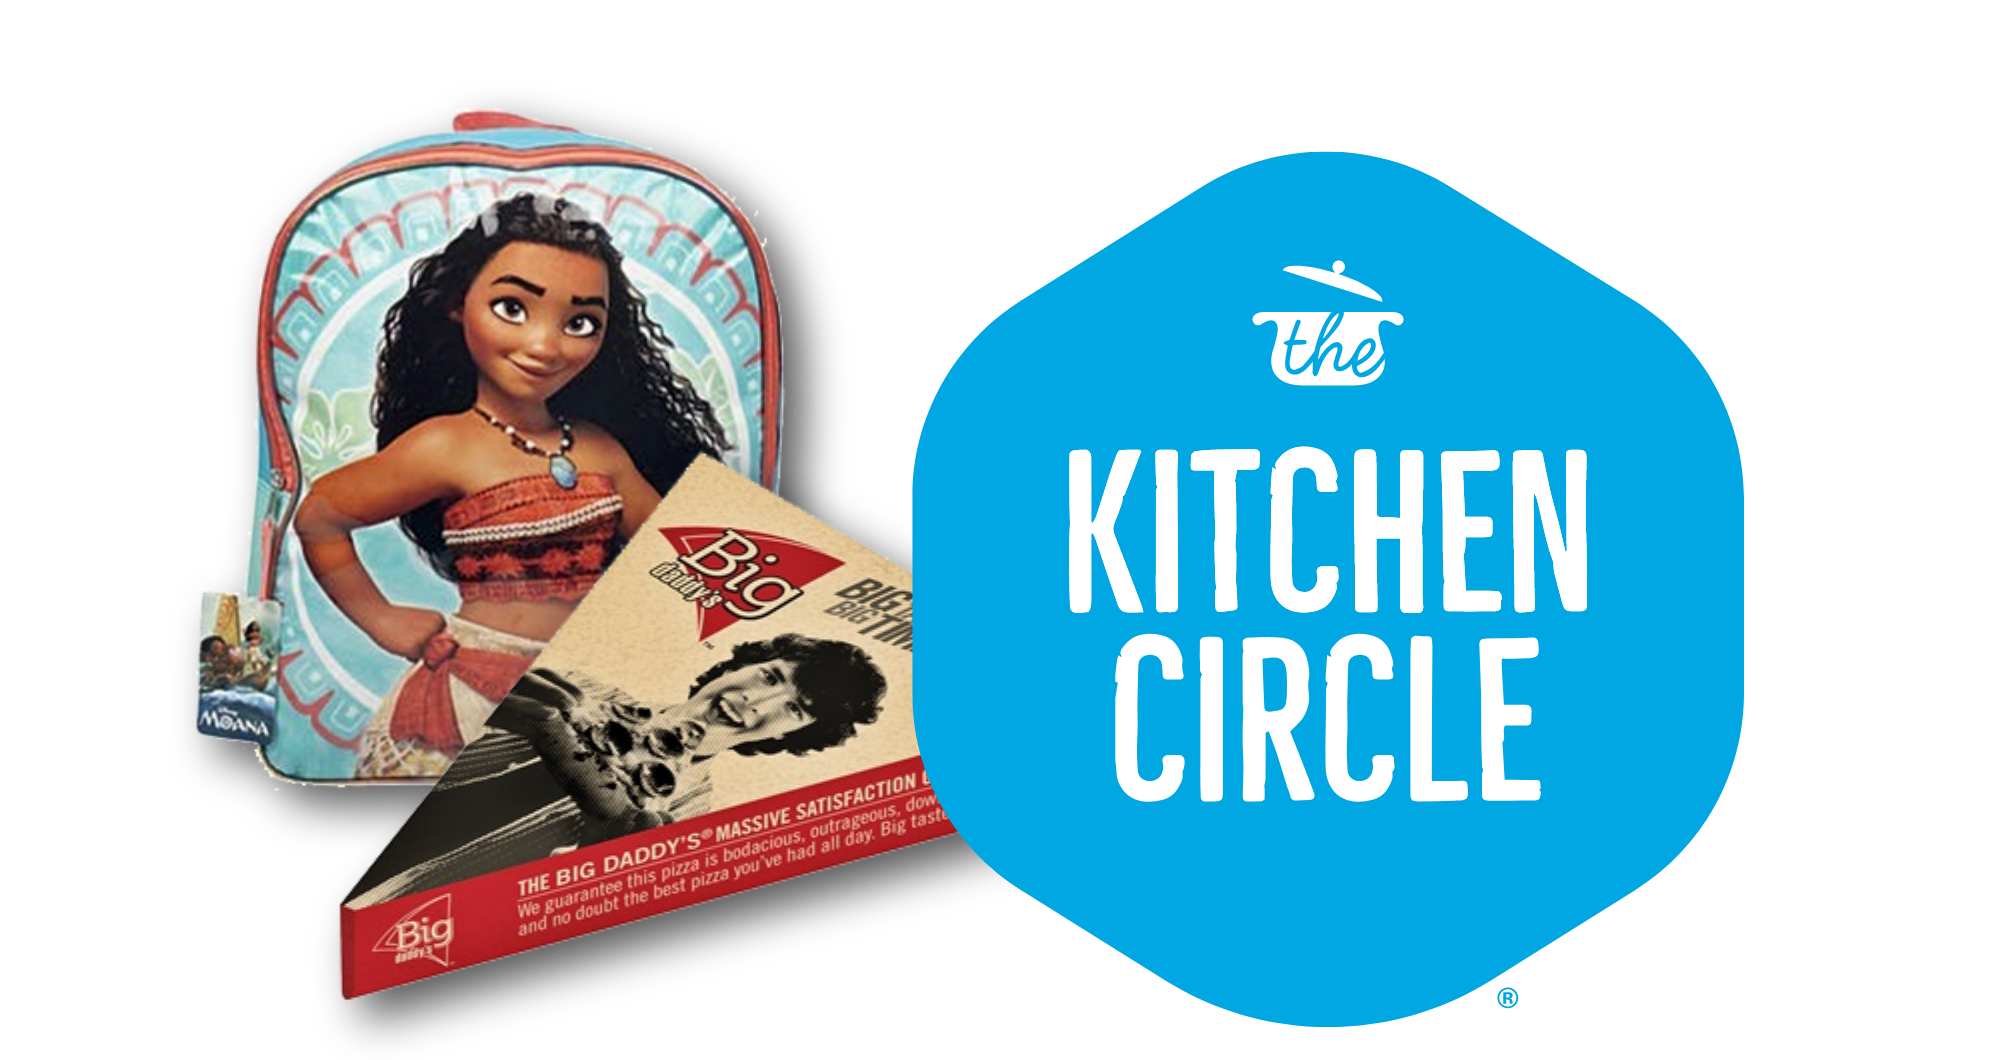 The Kitchen Circle logo next to product reward examples